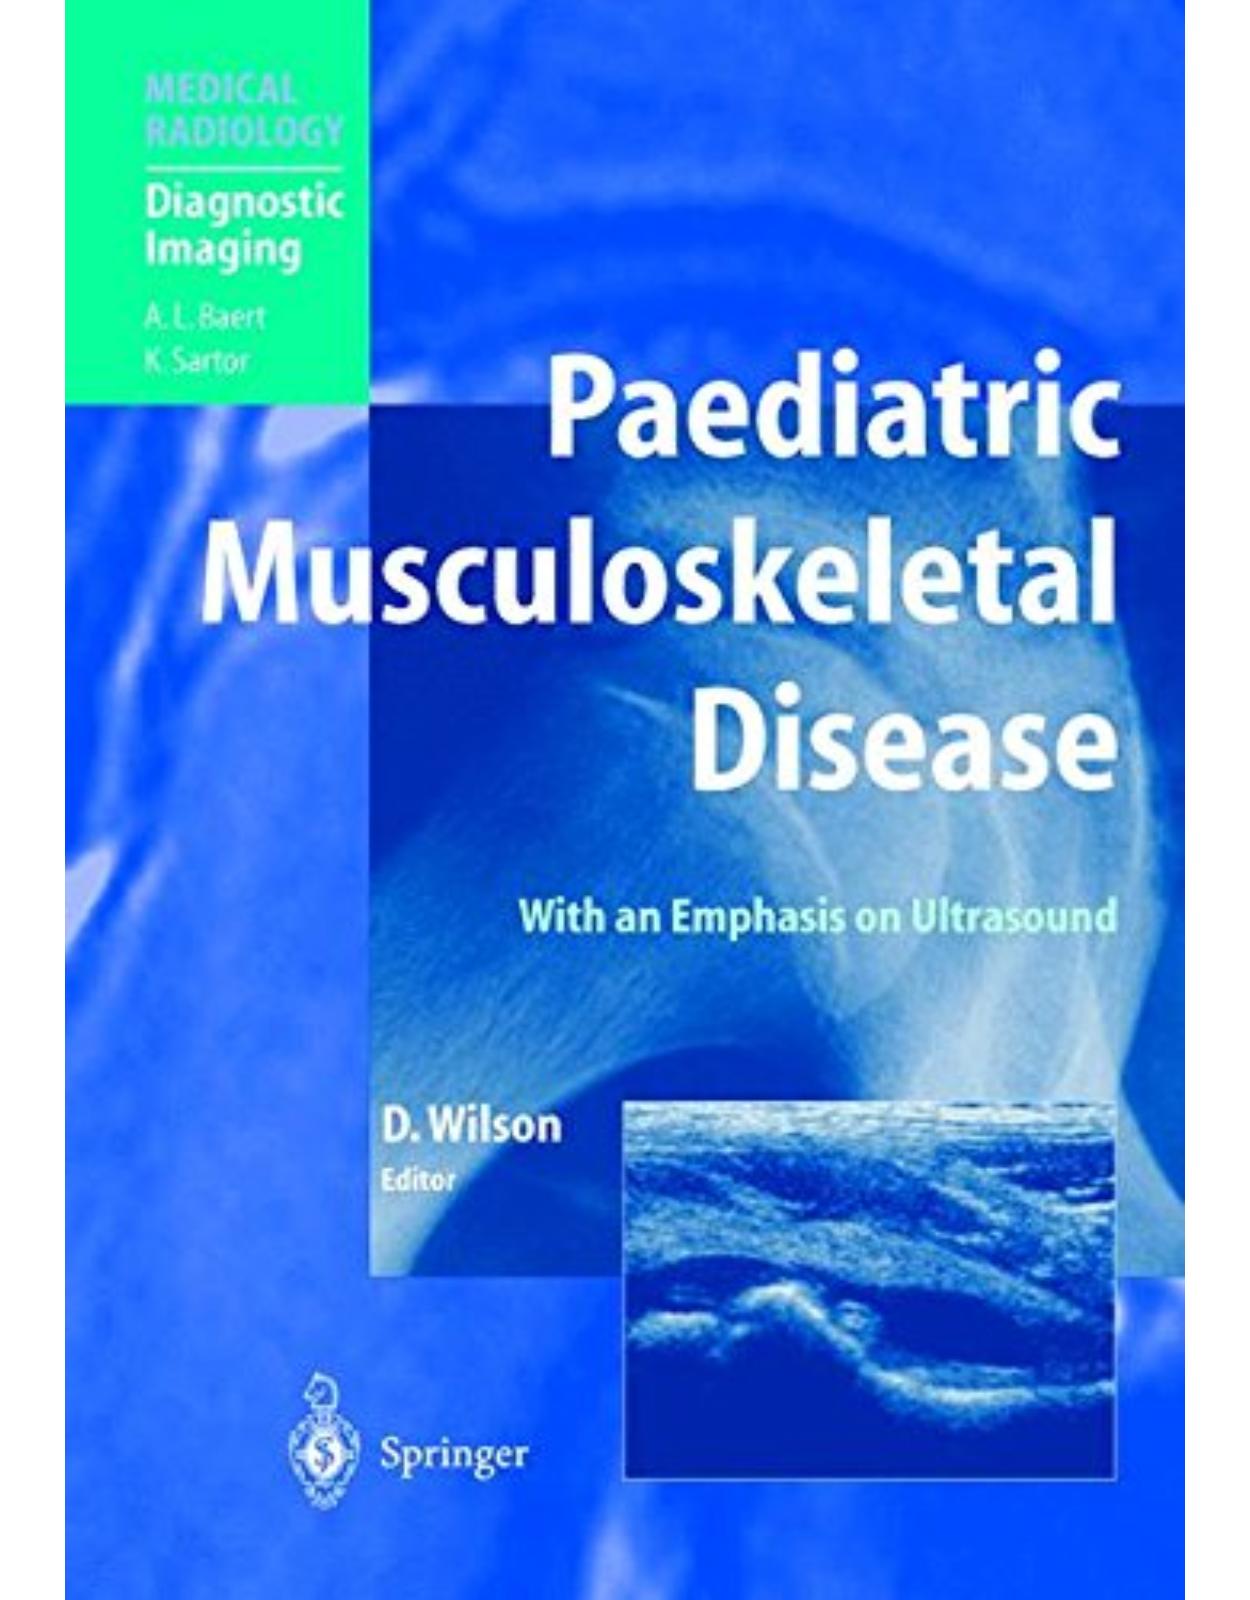 Paediatric Muscoloskeletal Disease